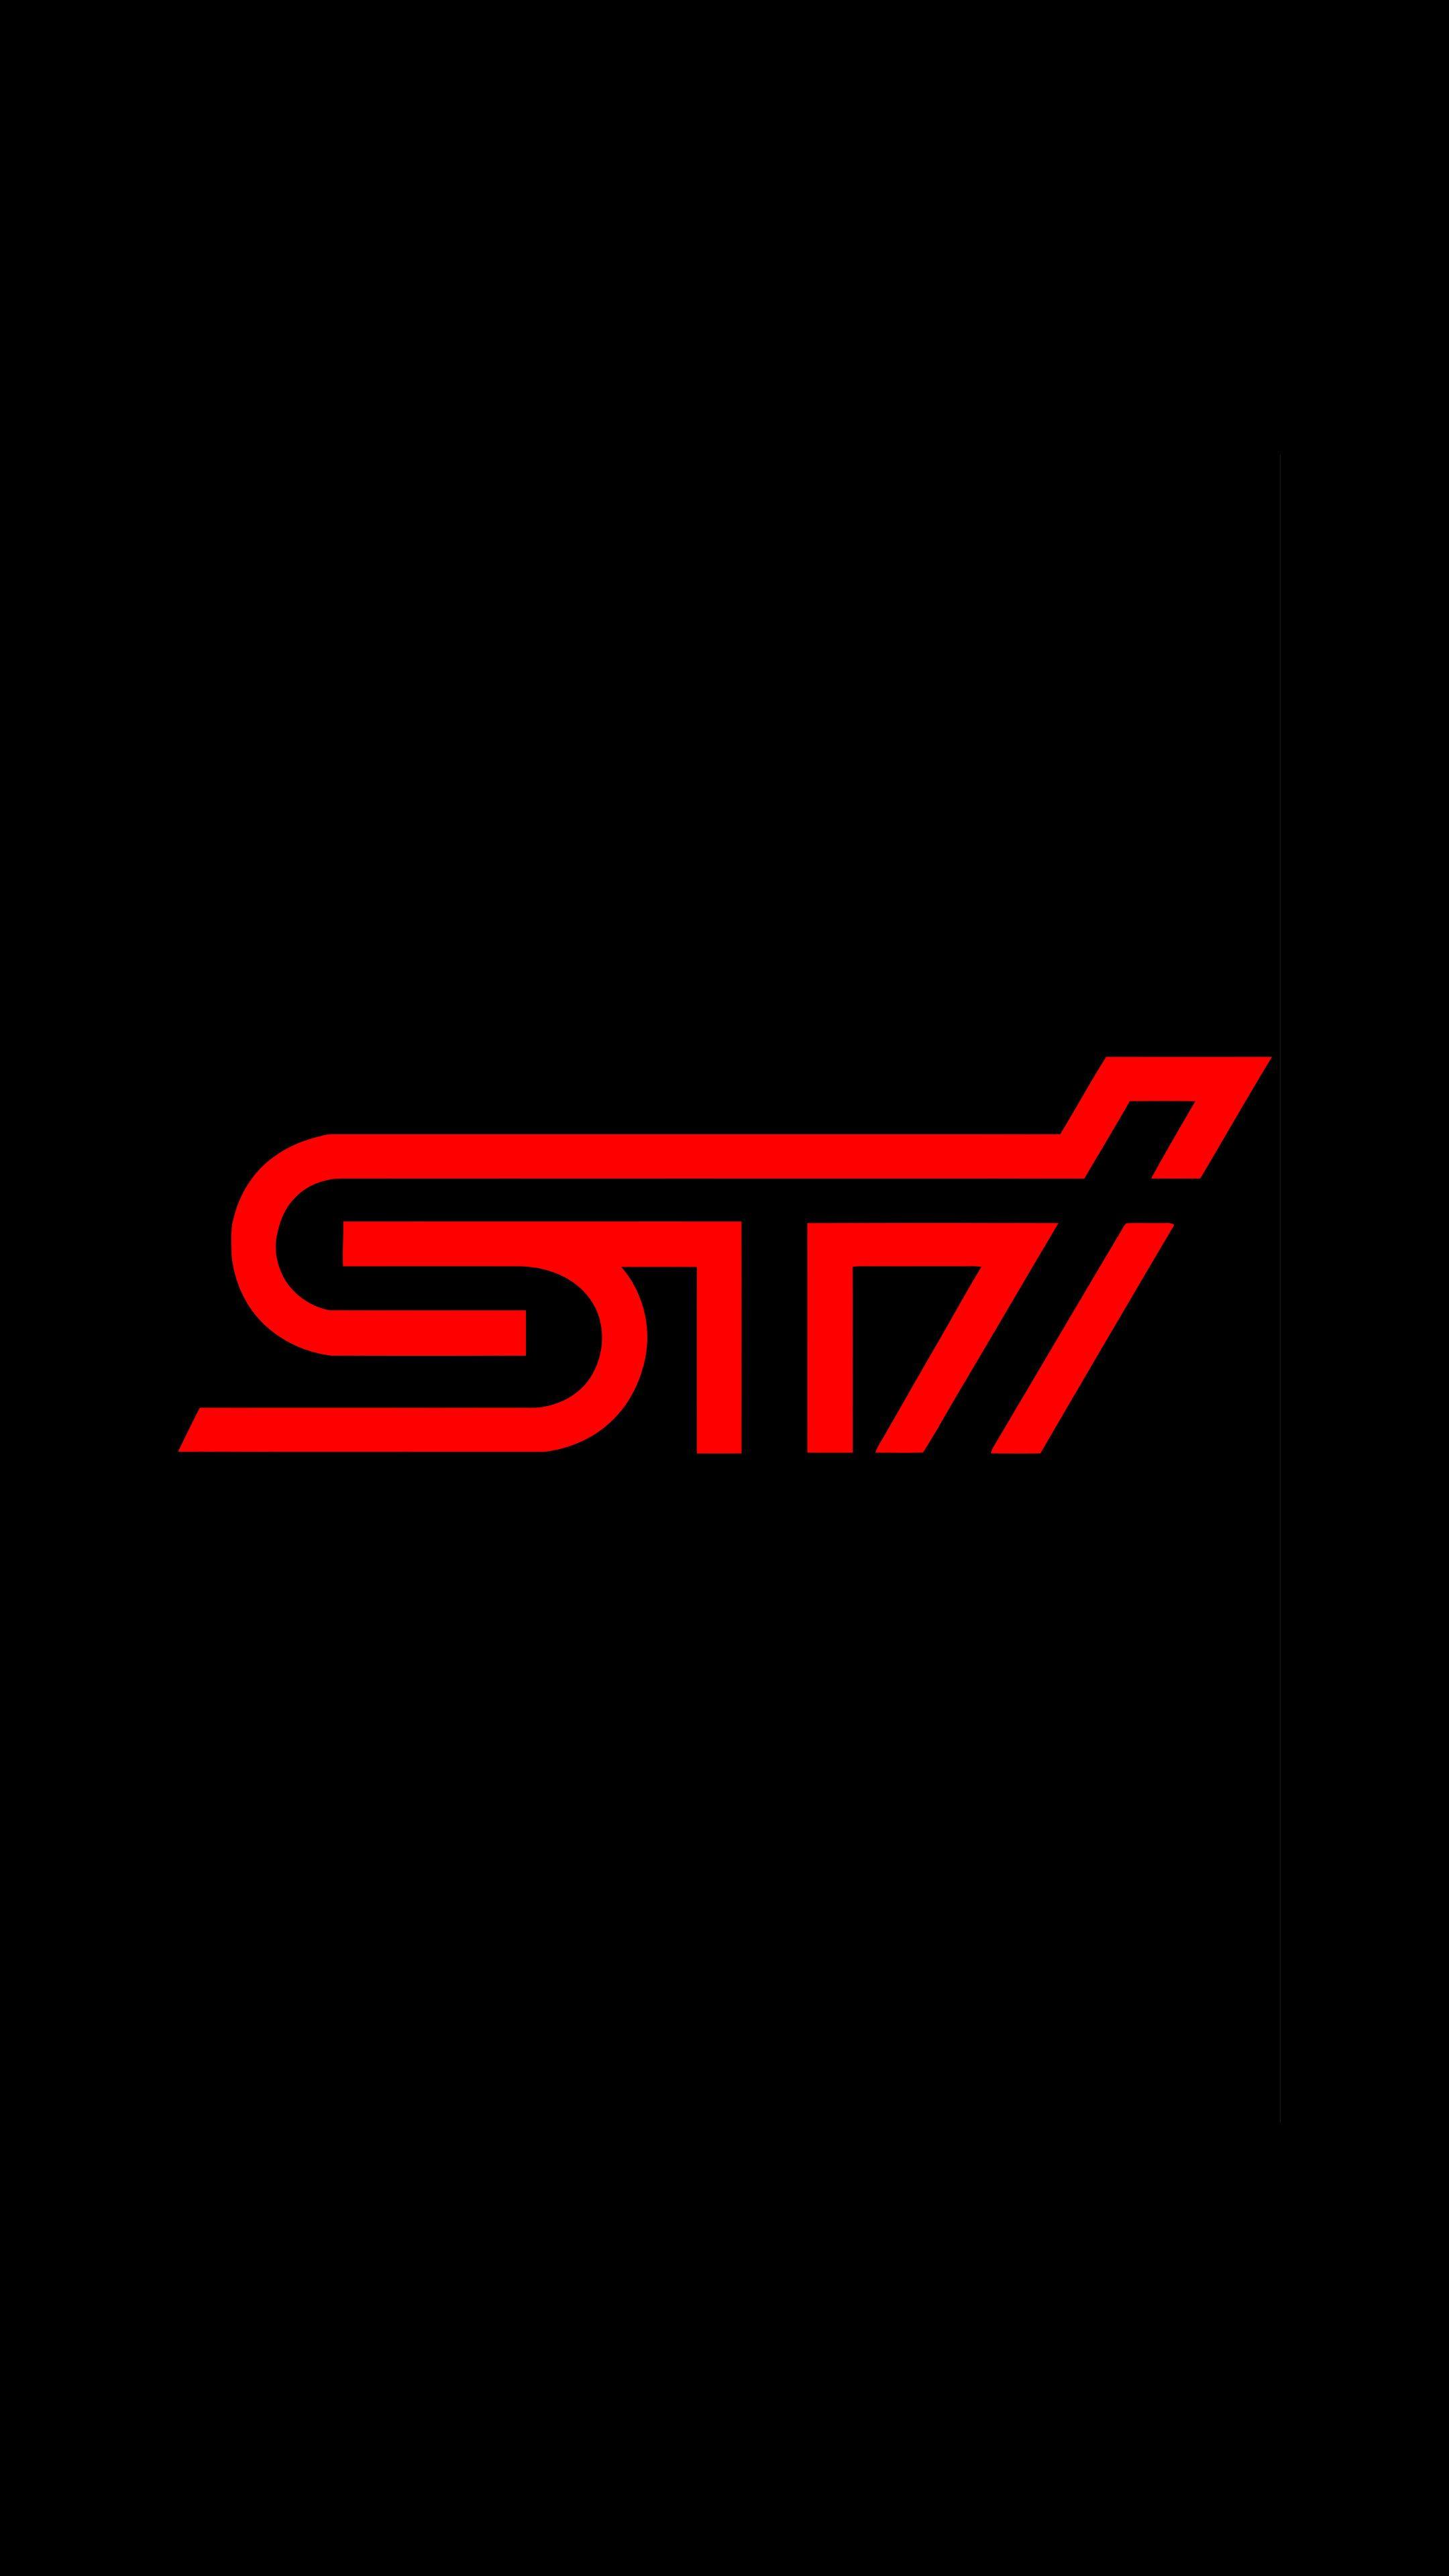 Subaru Sti Logo Wallpaper